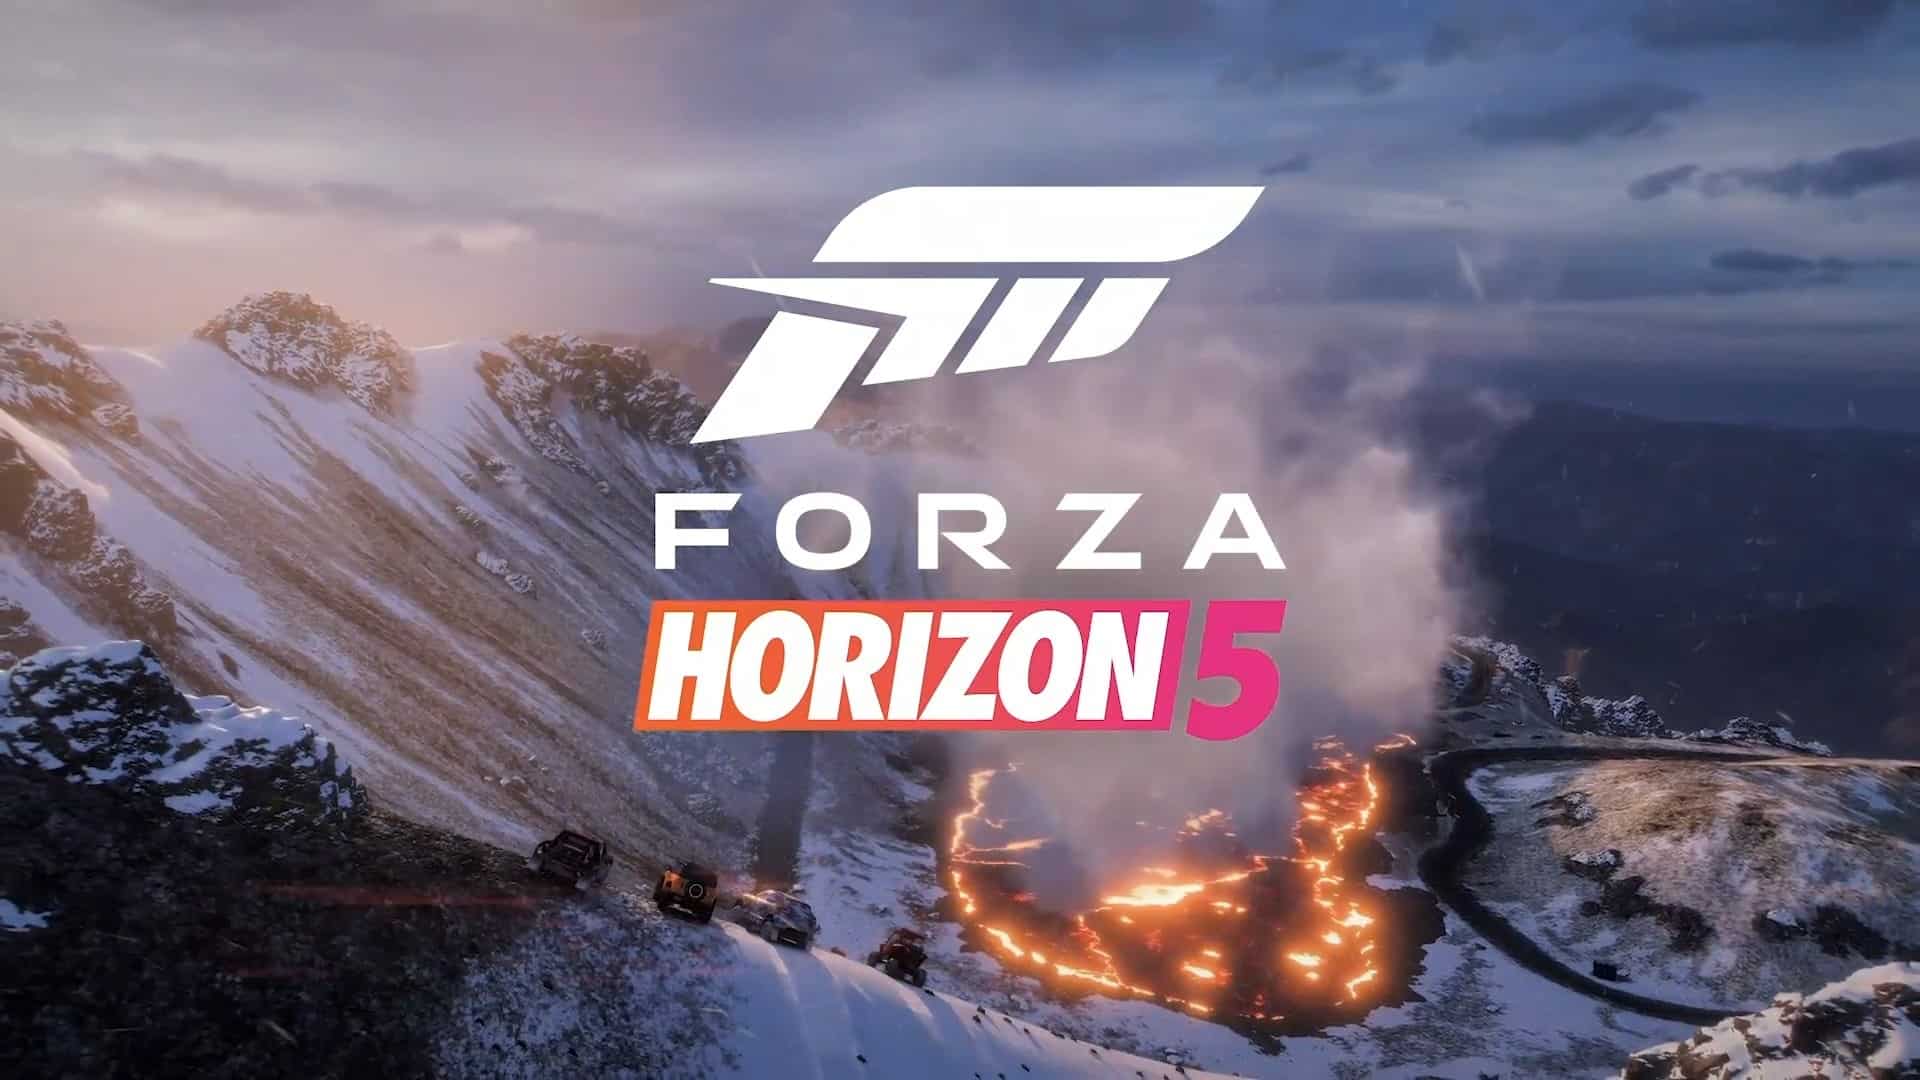 Experimenterar du Forza Horizon 5?  Följ!  Brain shoulder haver-demo!